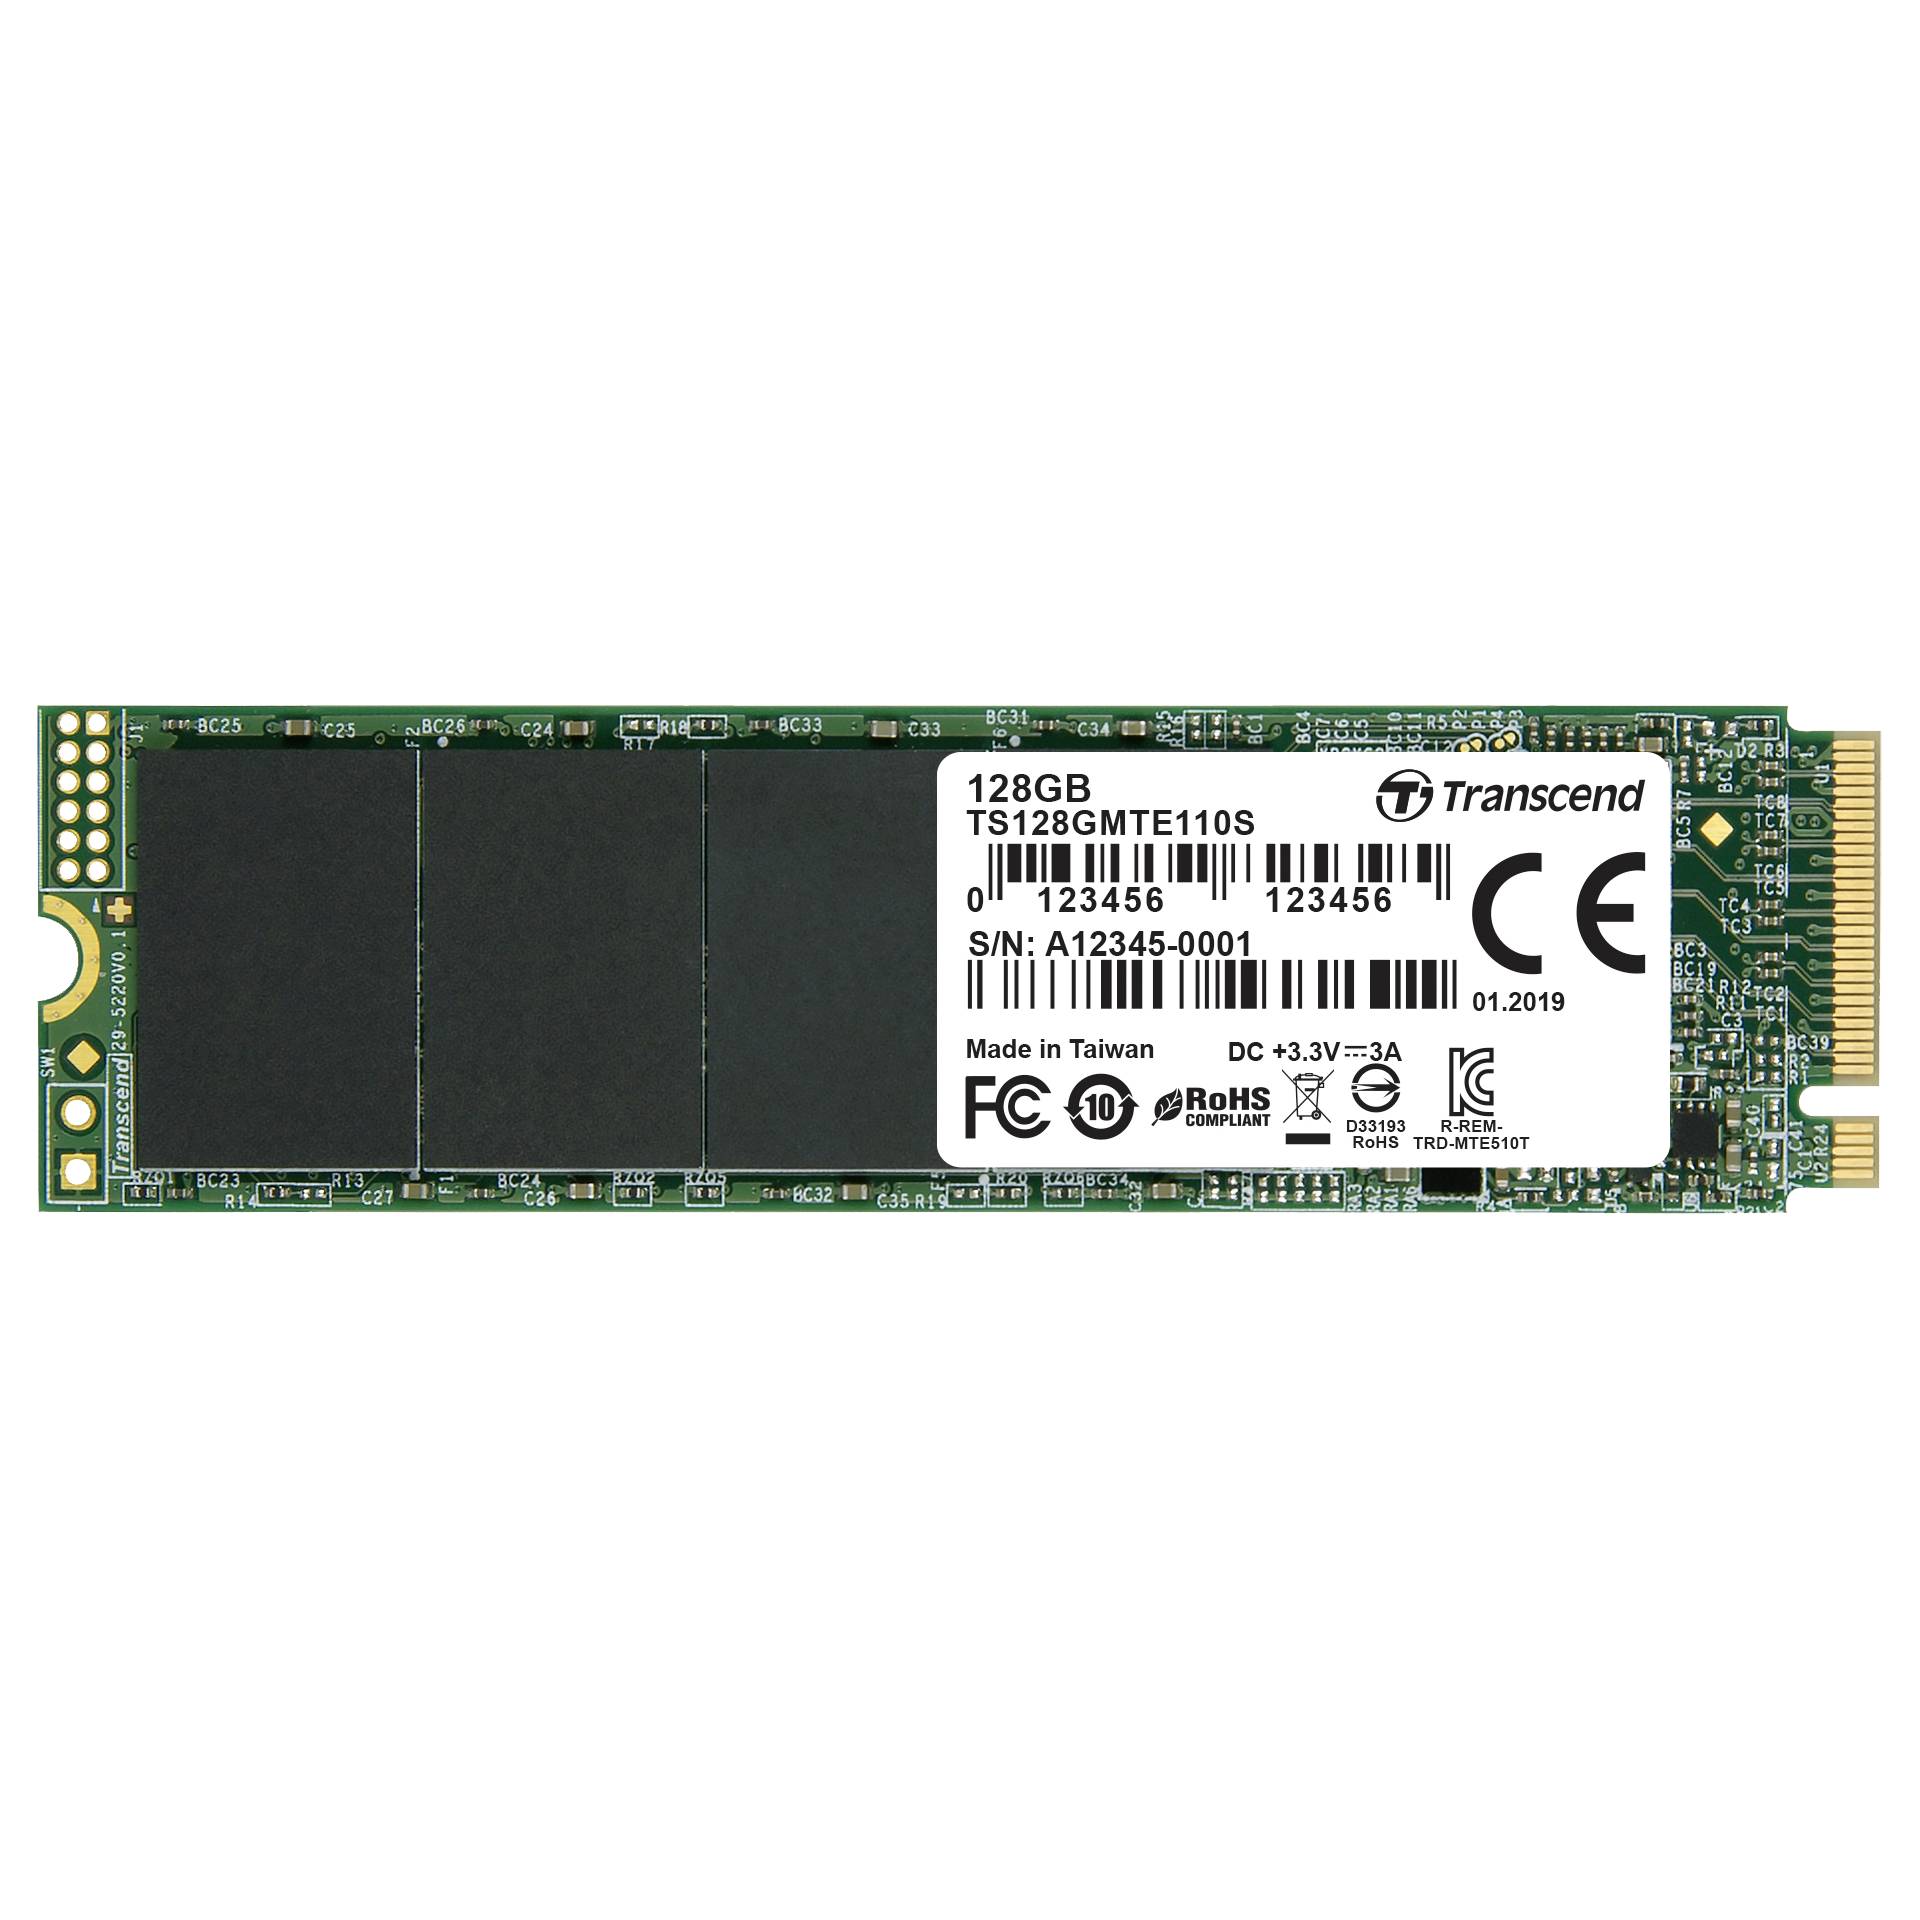 Transcend SSD MTE110S      128GB NVMe PCIe Gen3 x4